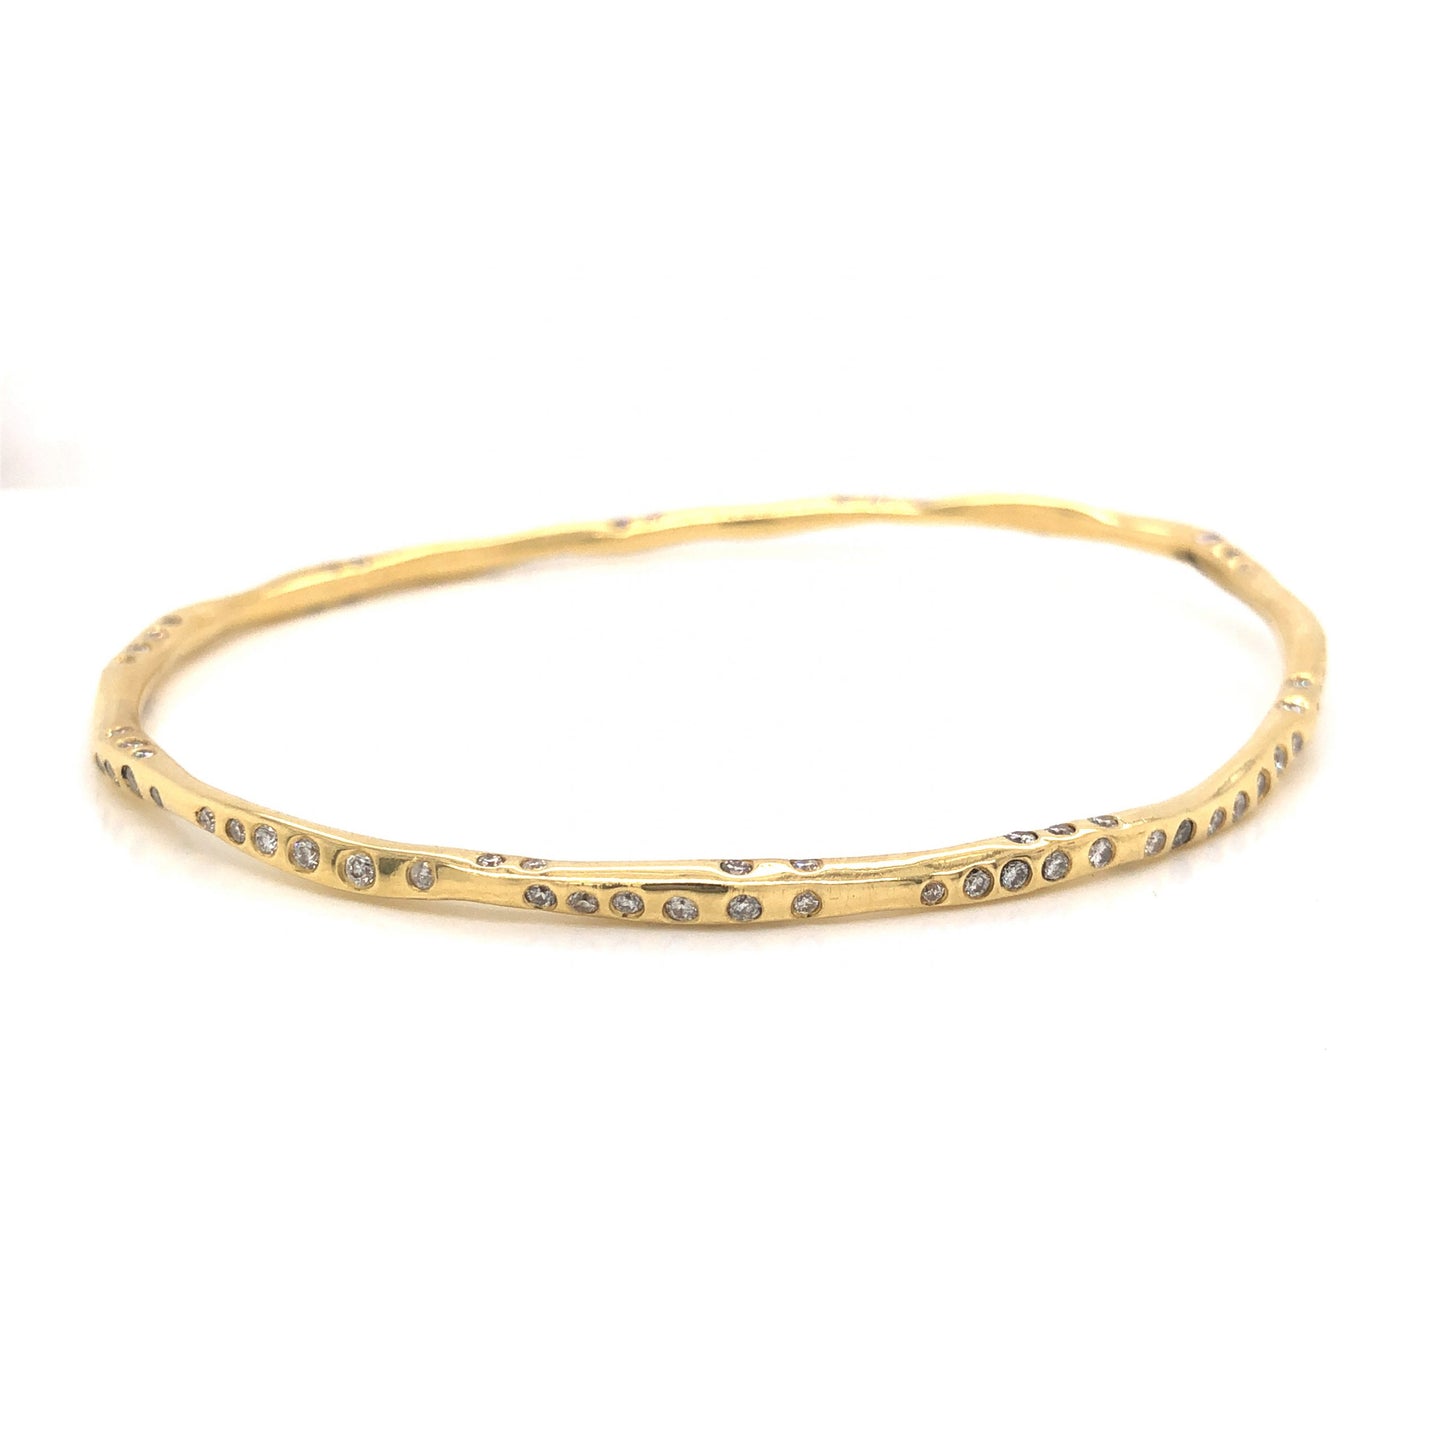 1.49 Ippolita Superstar Diamond Bangle Bracelet in 18k Yellow Gold